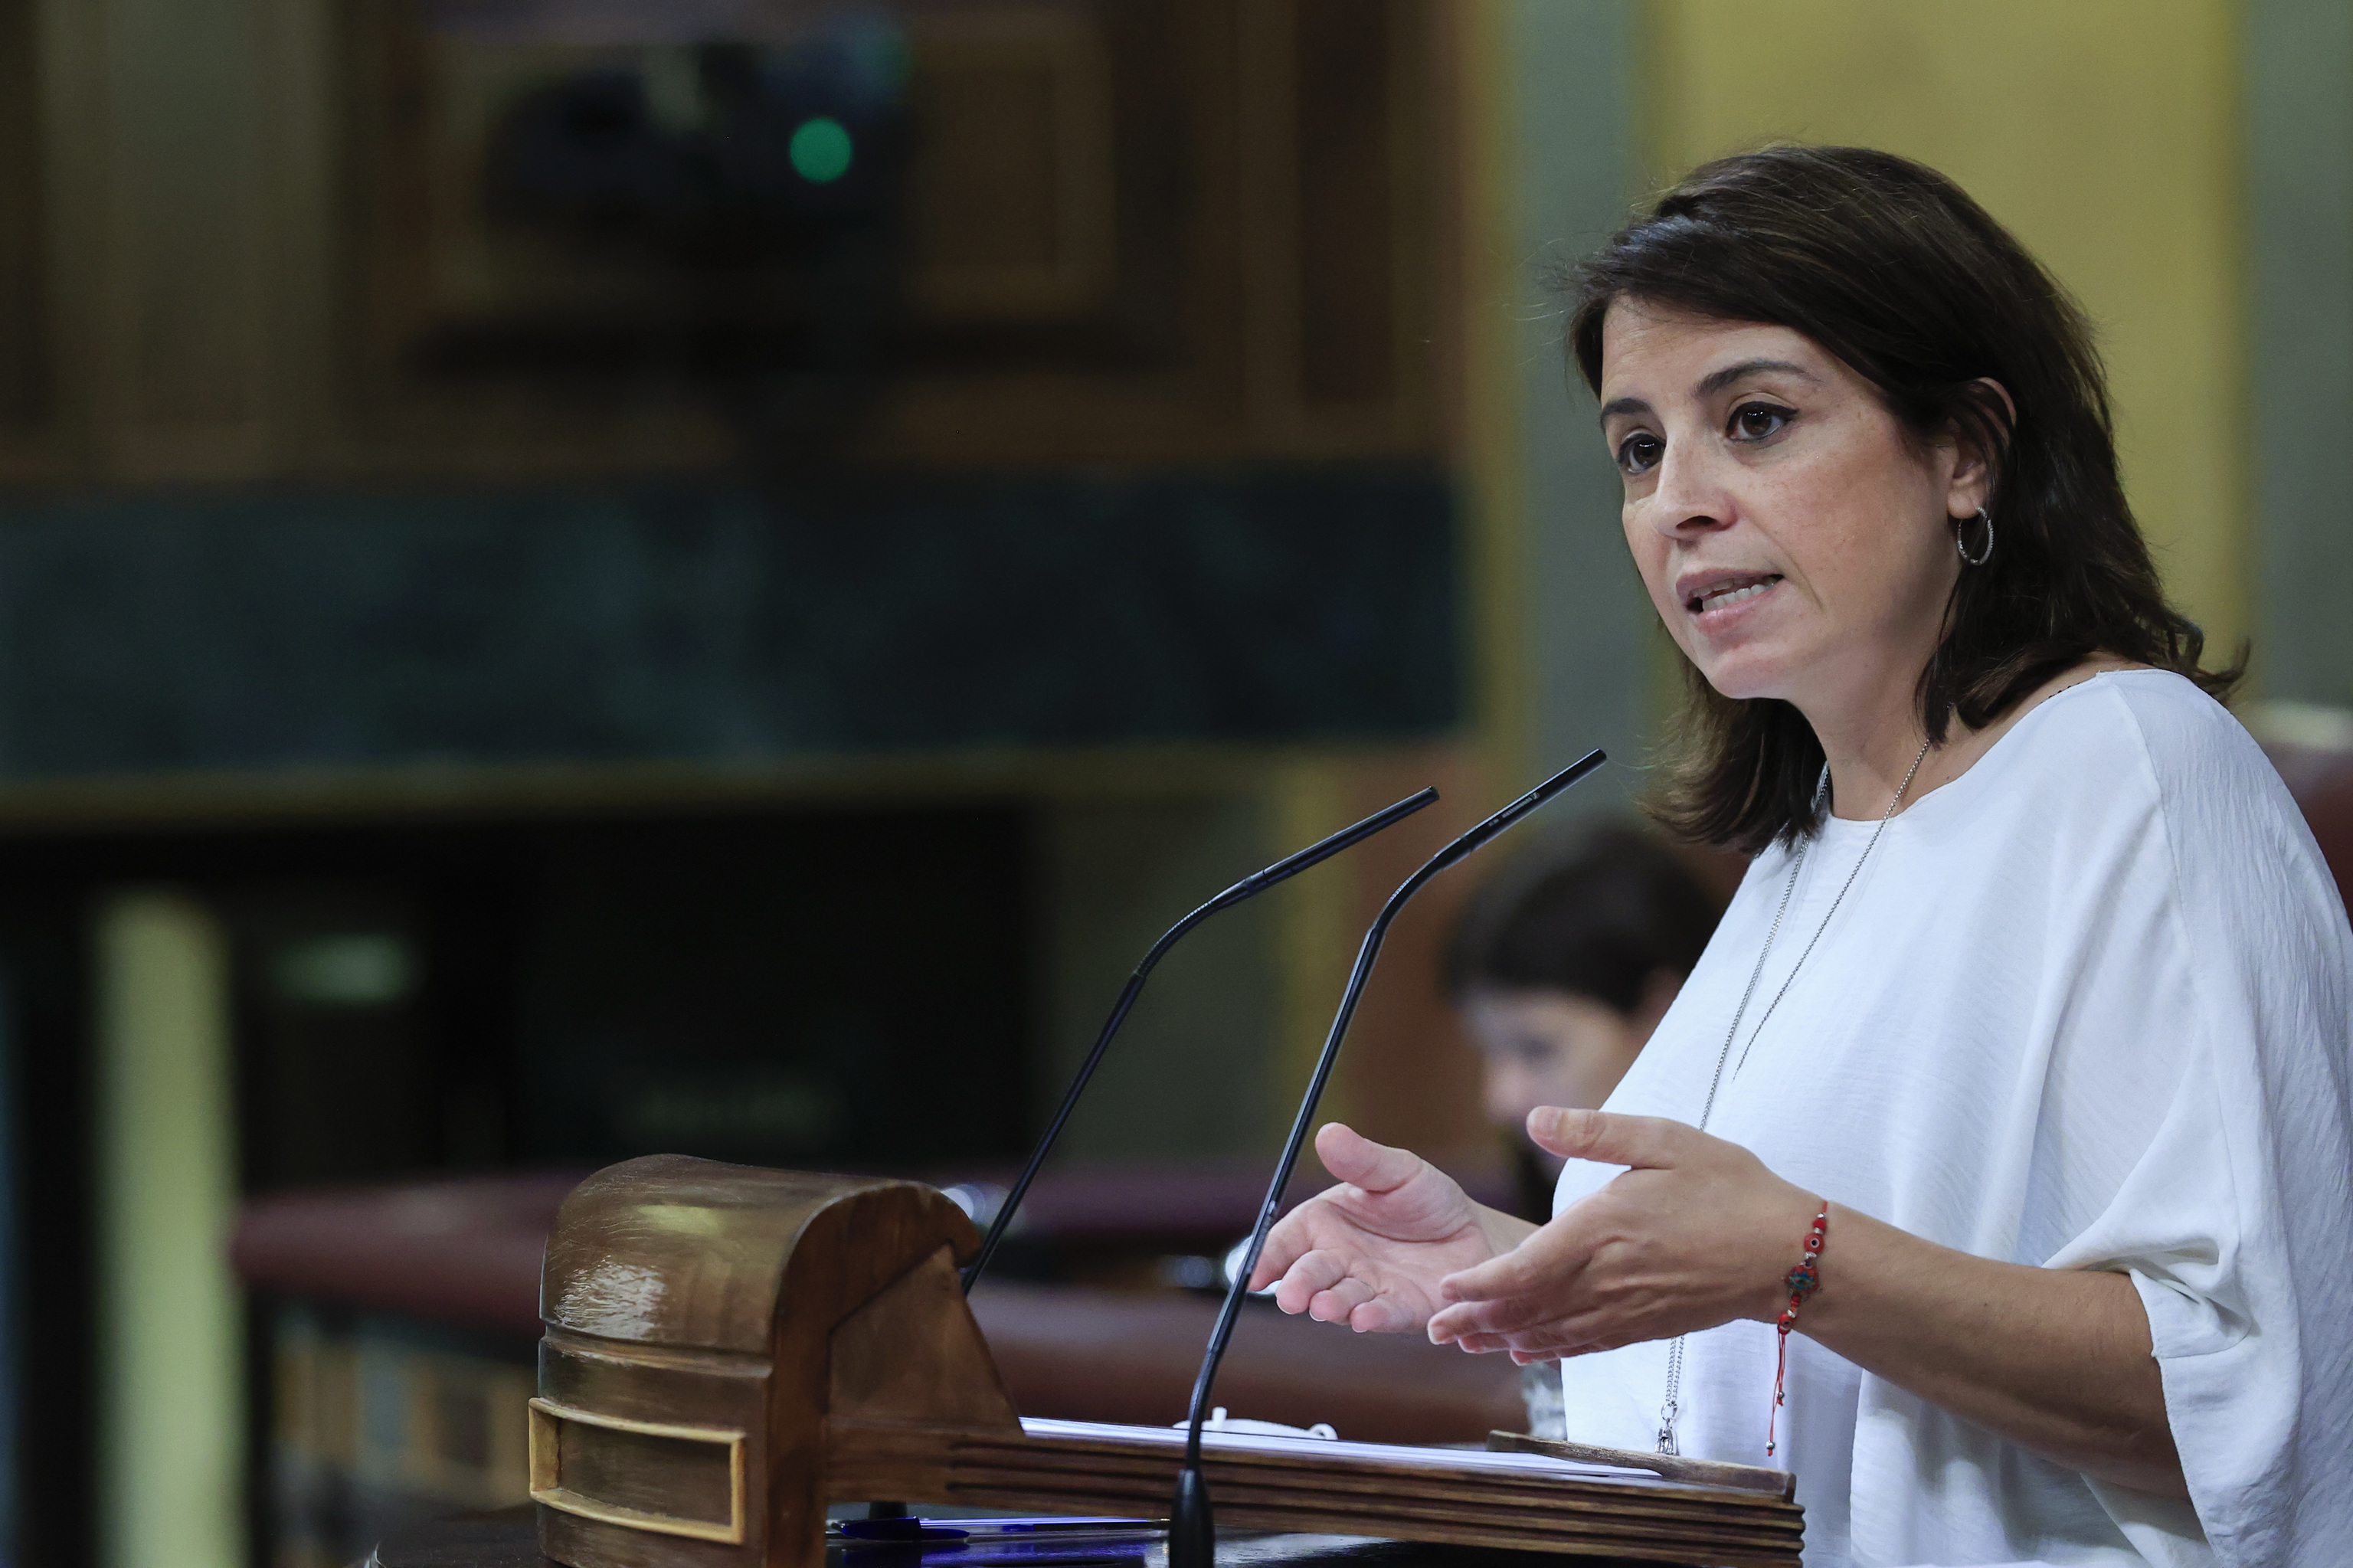 Adriana Lastra (PSOE) intervenes in the debate in Congress.